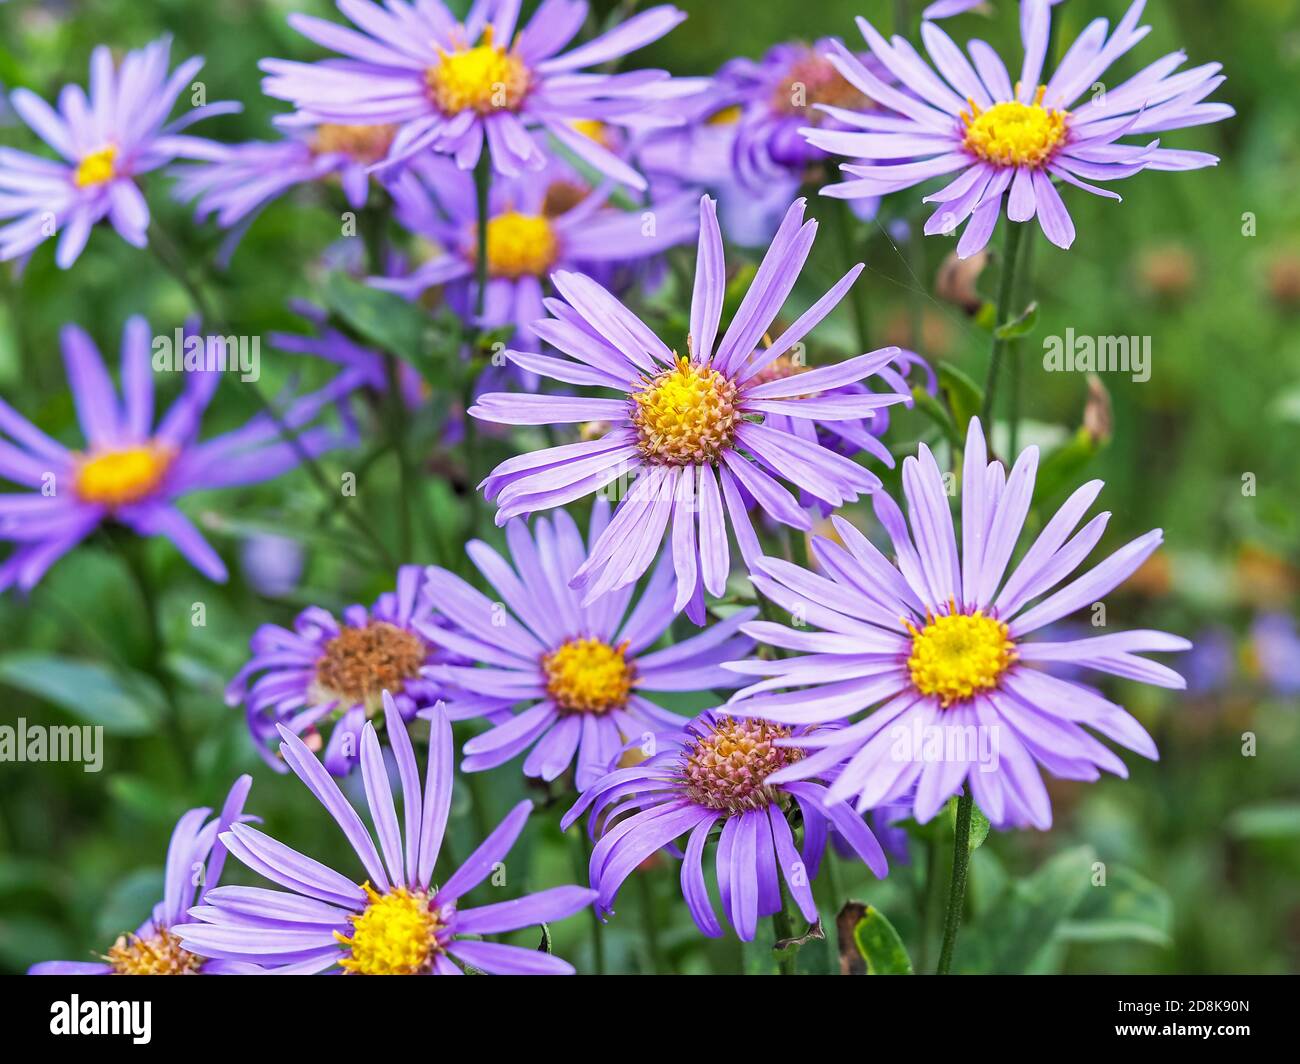 Closeup of purple Michaelmas daisy flowers, Aster amellus Rudolf goethe, in a garden Stock Photo